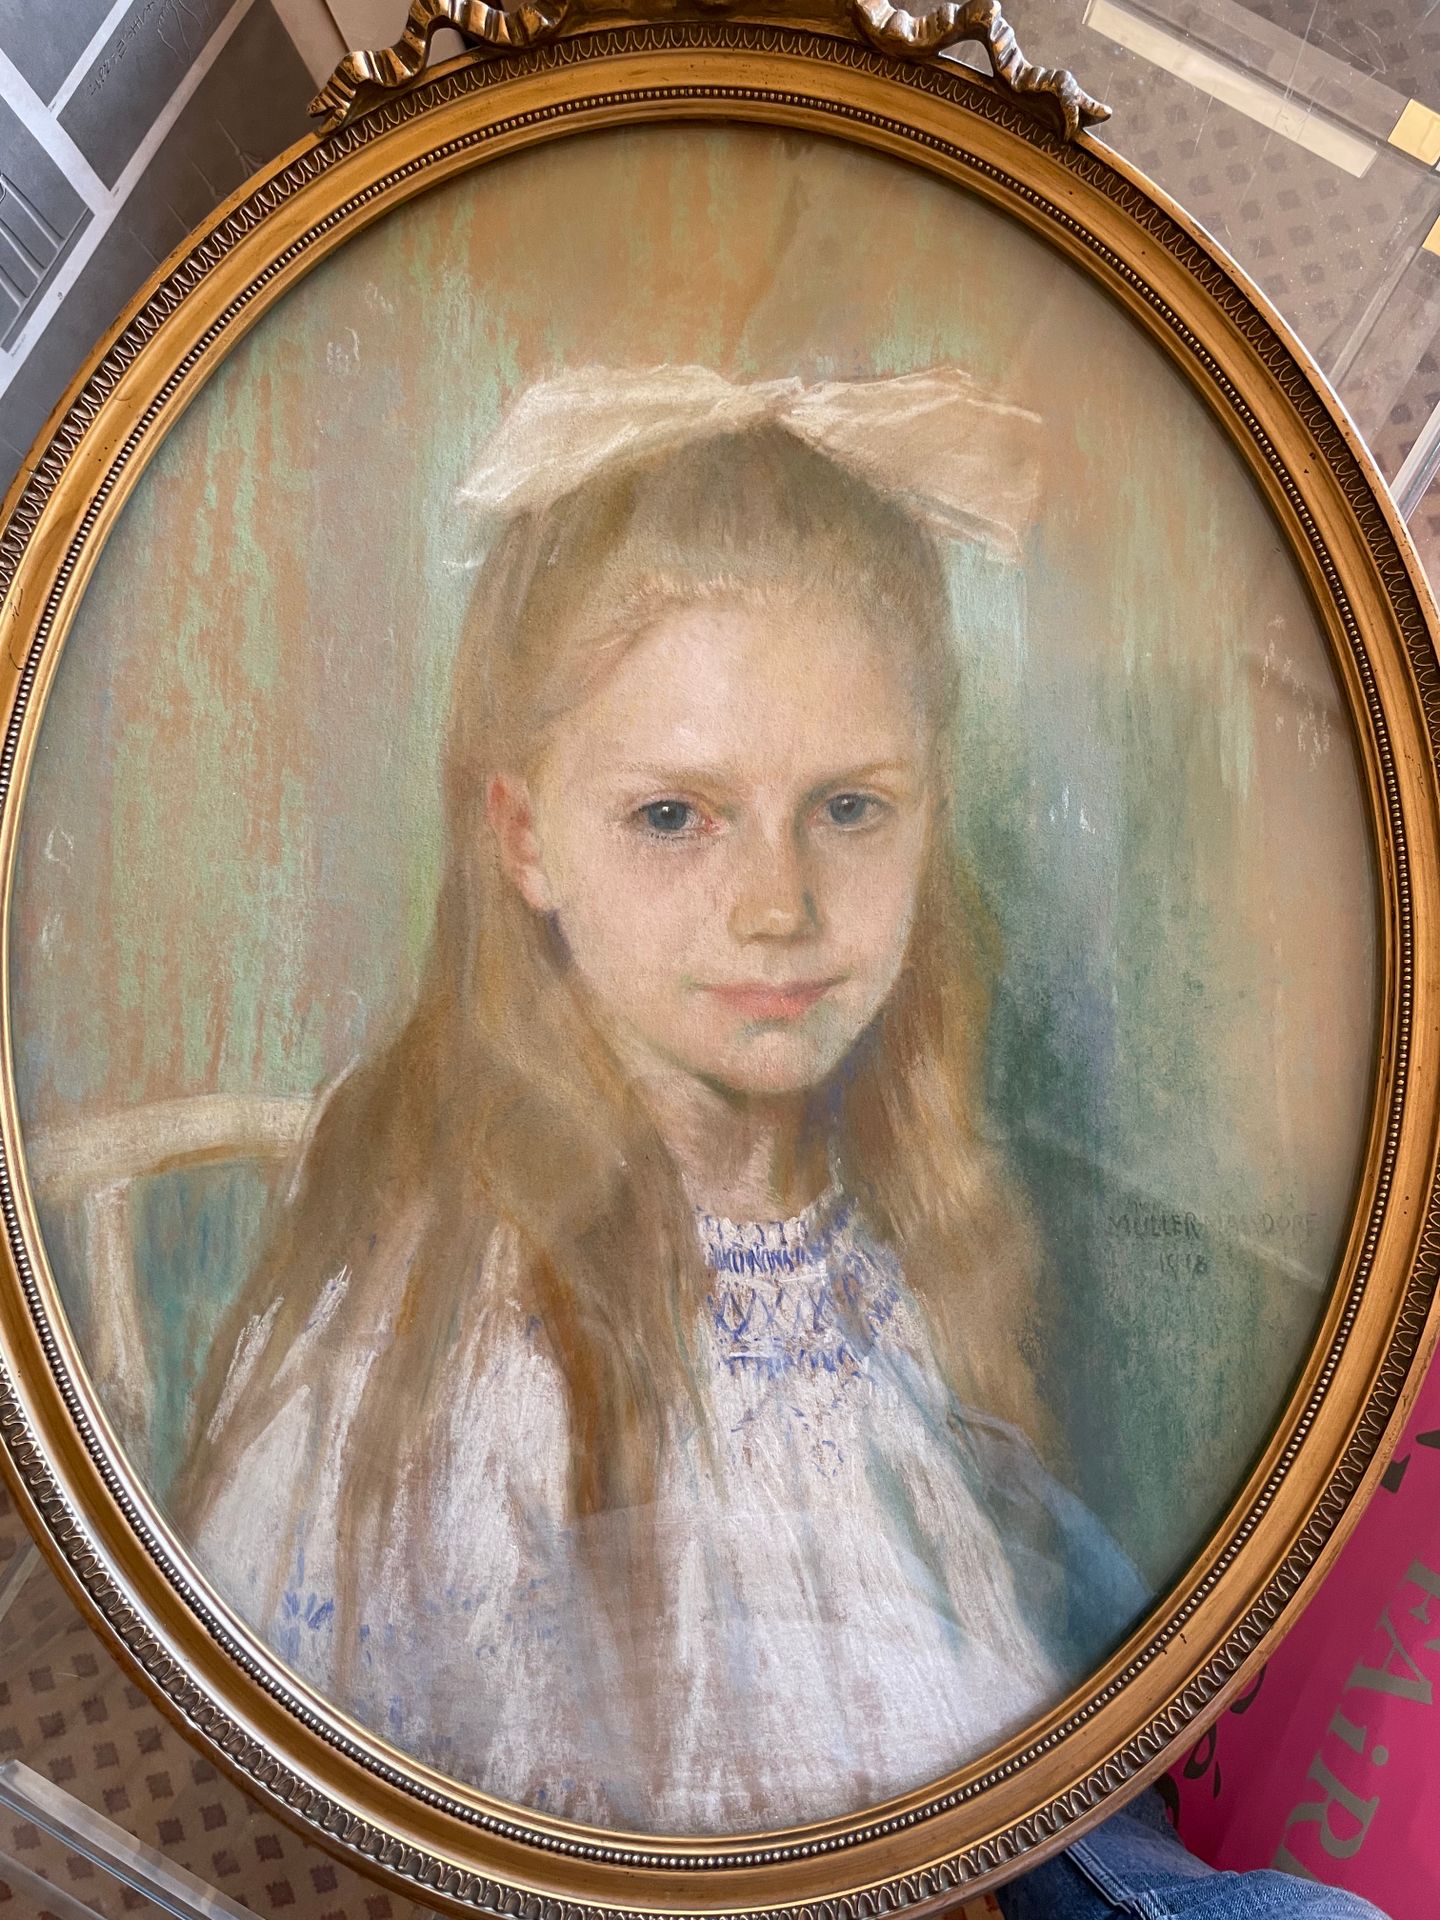 Julius MÜLLER-MASSDORF (1963-1933) 半身少女的肖像
粉彩画
右下角有签名和日期 1918
高50.5厘米。